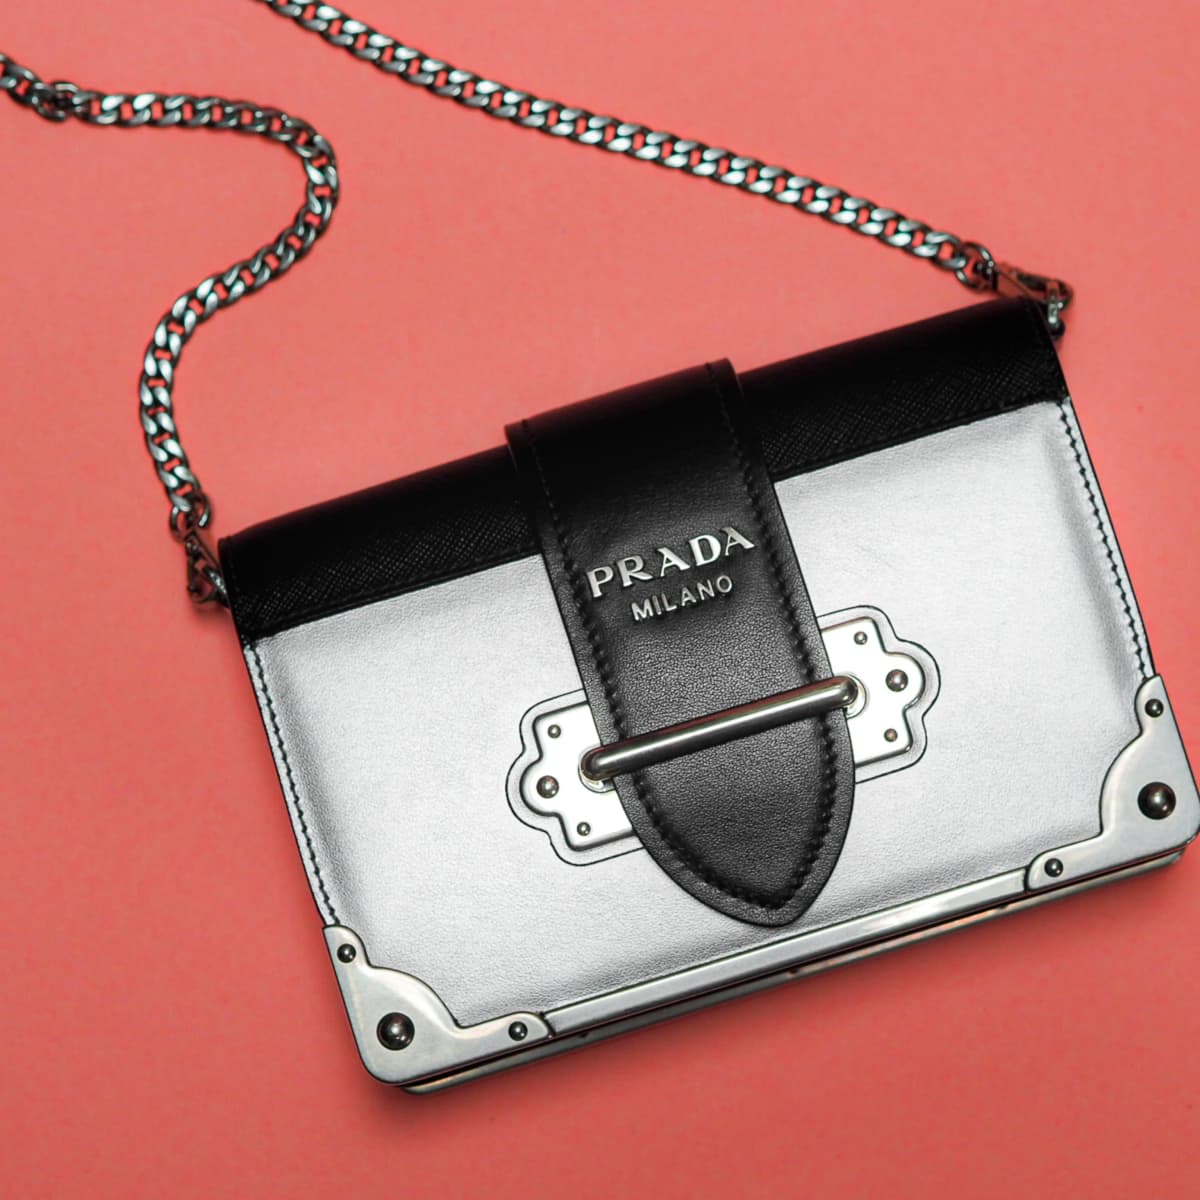 Prada purse with serial numbers below in descri